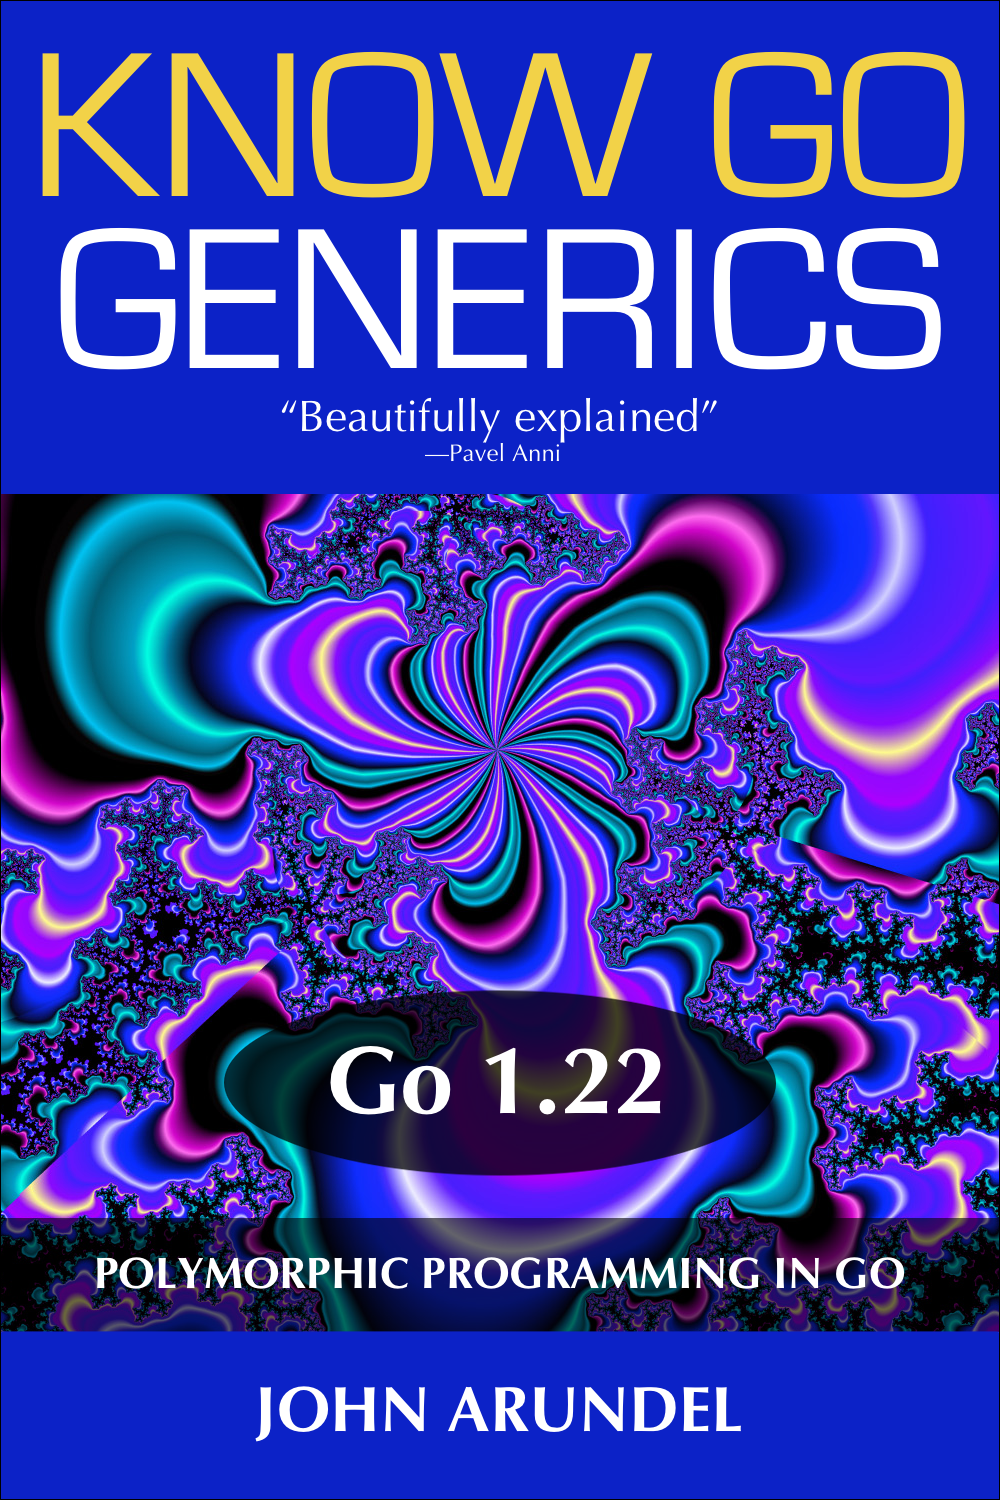 Know Go: Generics (Go 1.22 edition)